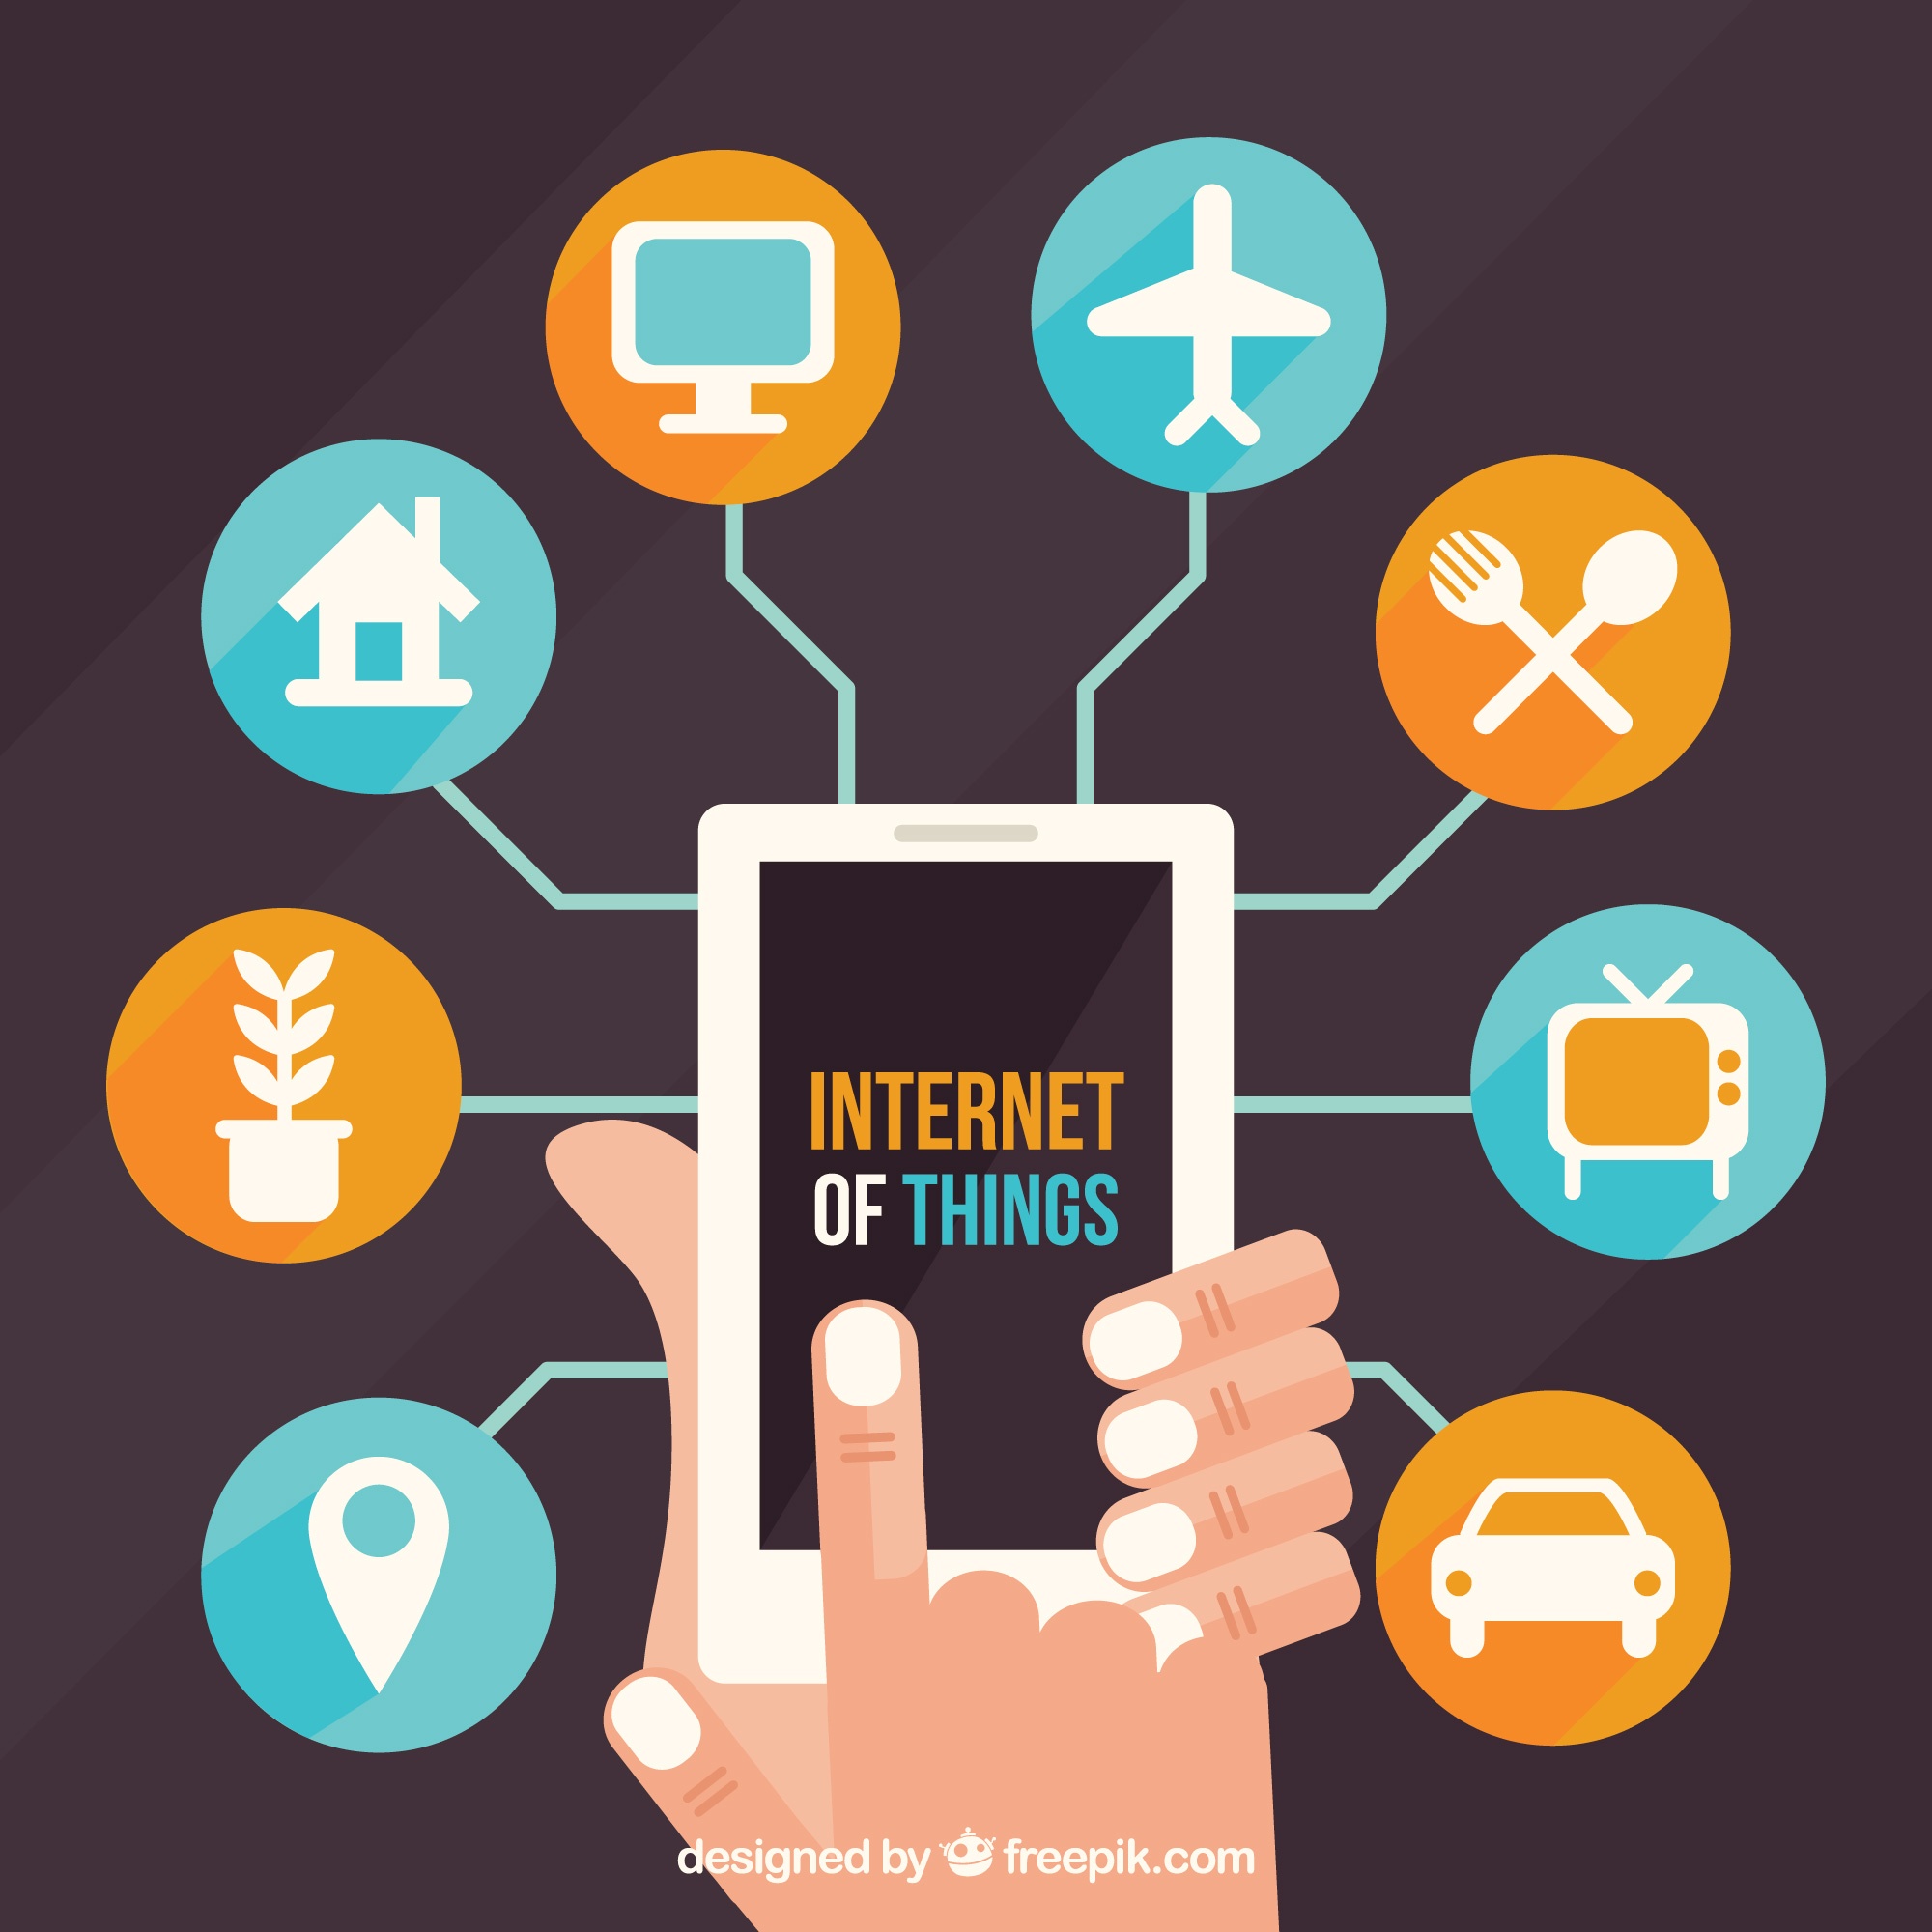 اینترنت اشیا (Internet of things – IoT)